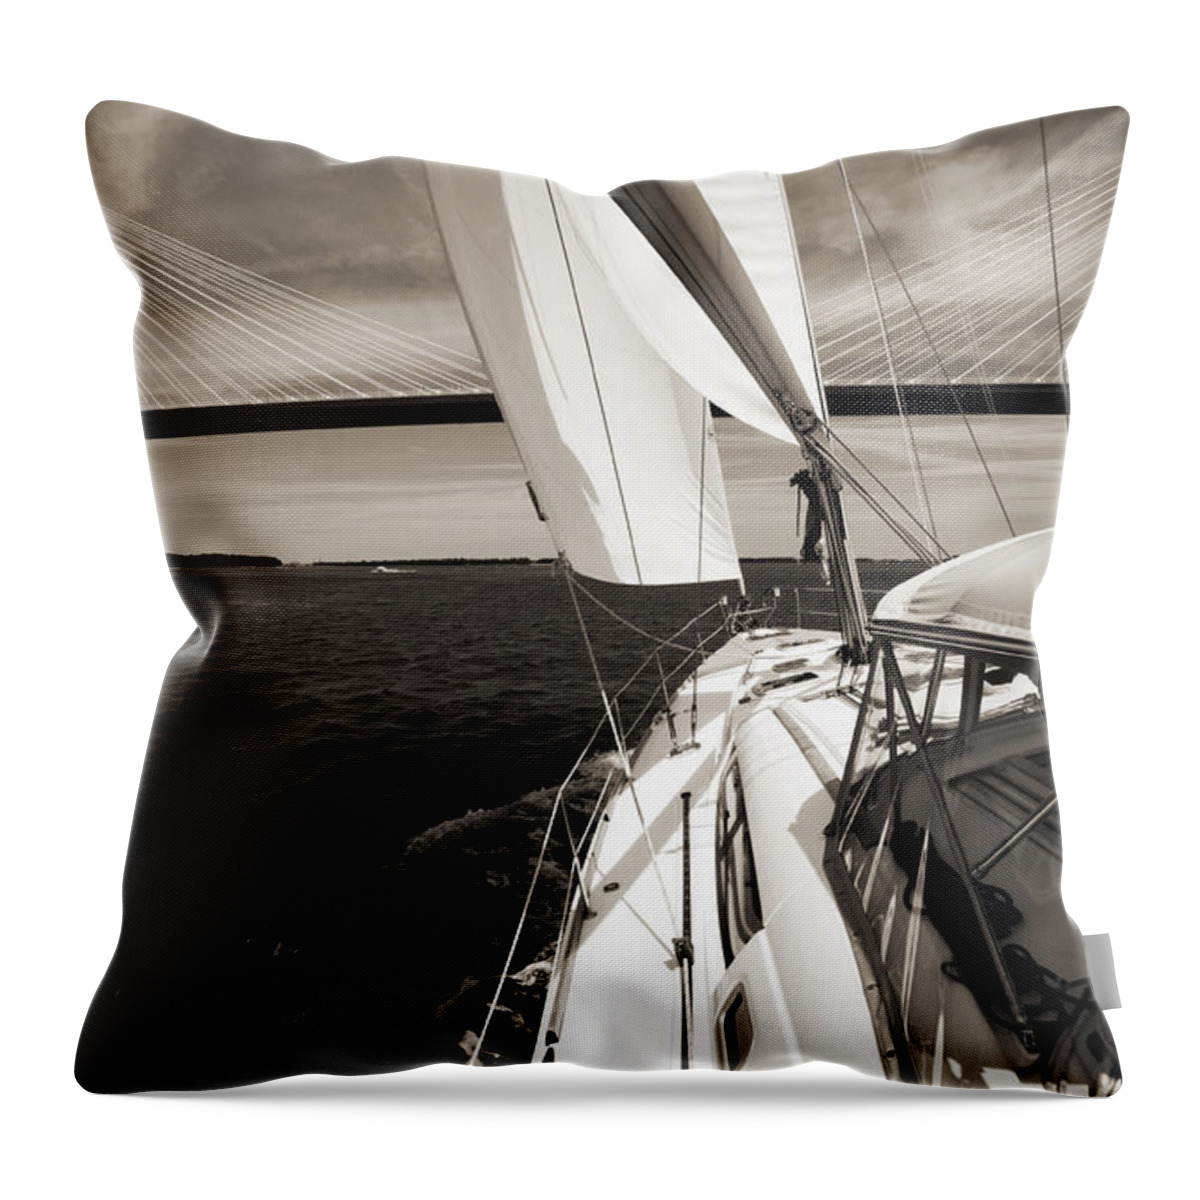 Sailing Throw Pillow featuring the photograph Sailing Under the Arthur Ravenel Jr. Bridge in Charleston SC by Dustin K Ryan